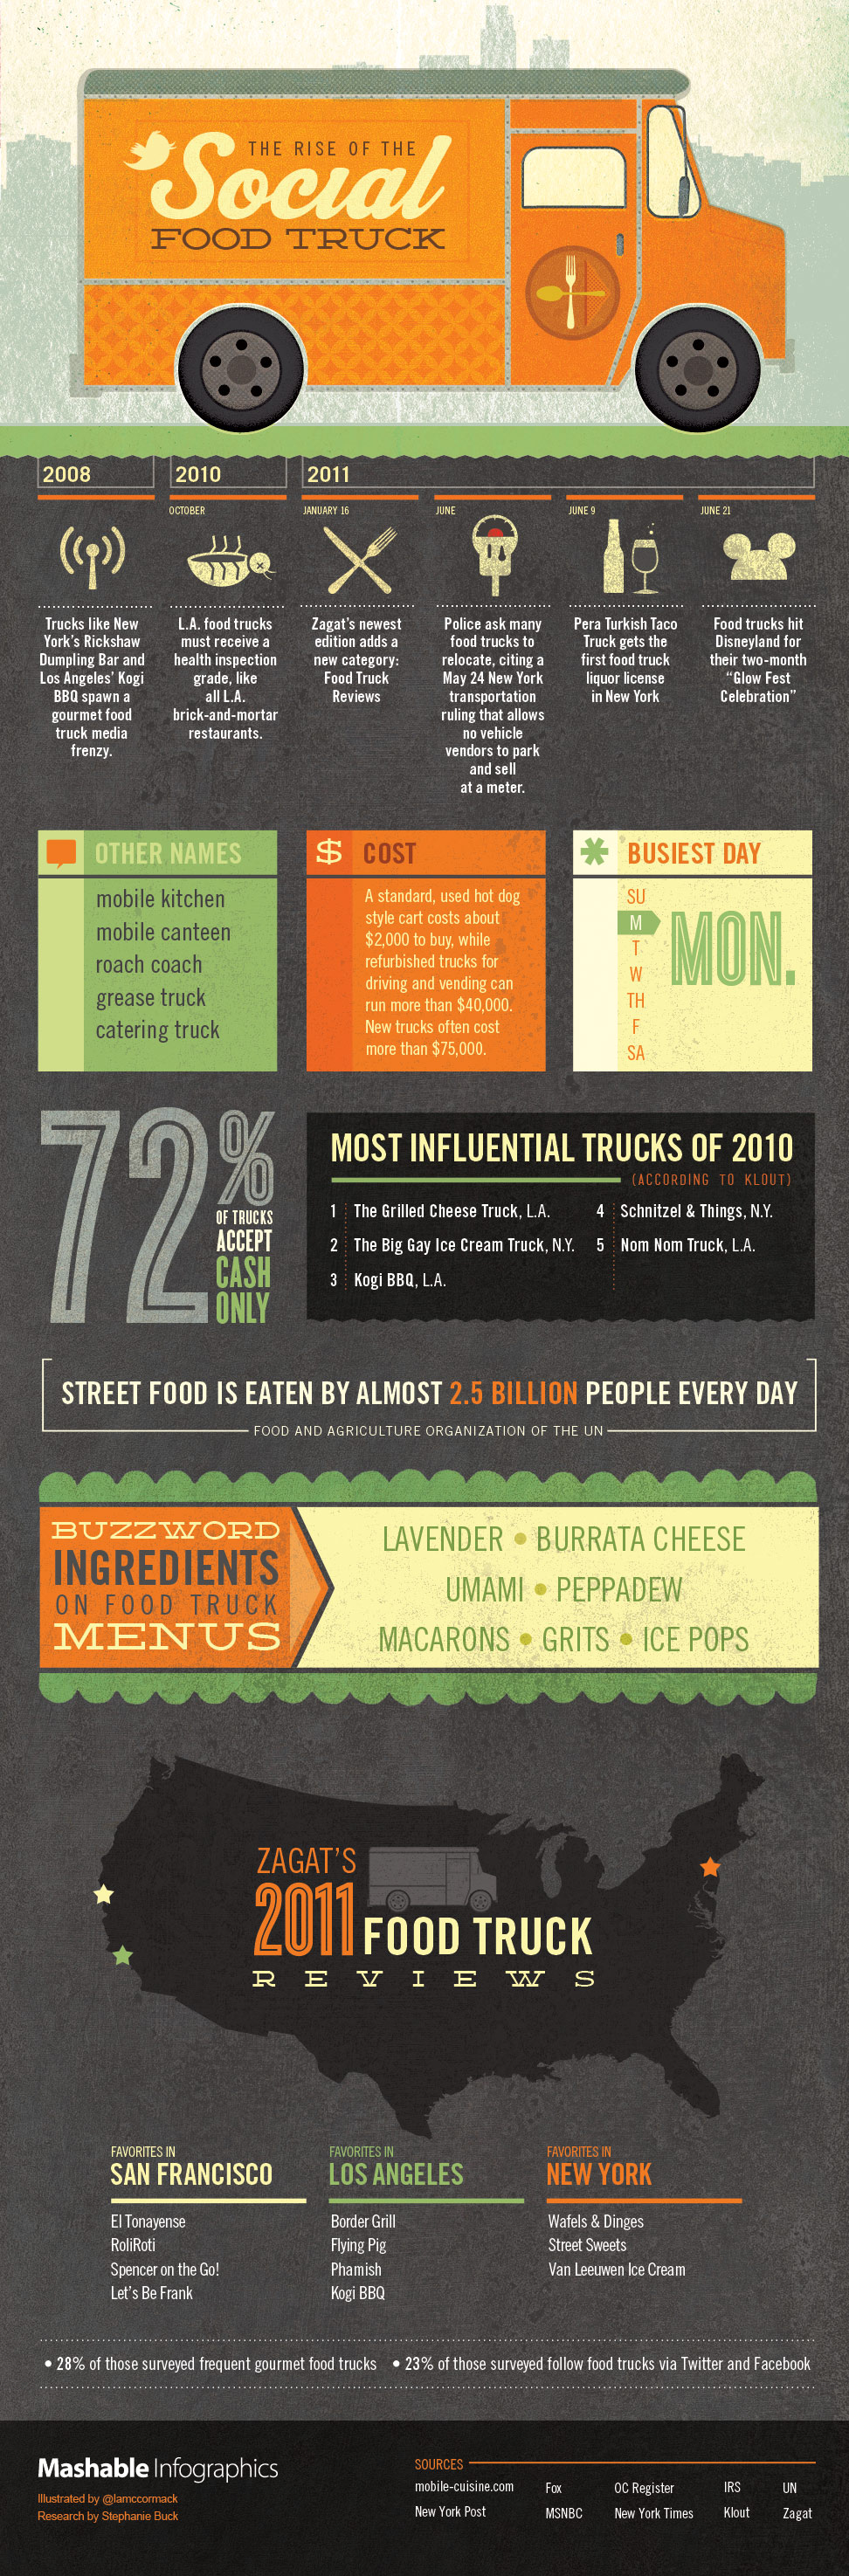 Mashable infographic food trucks